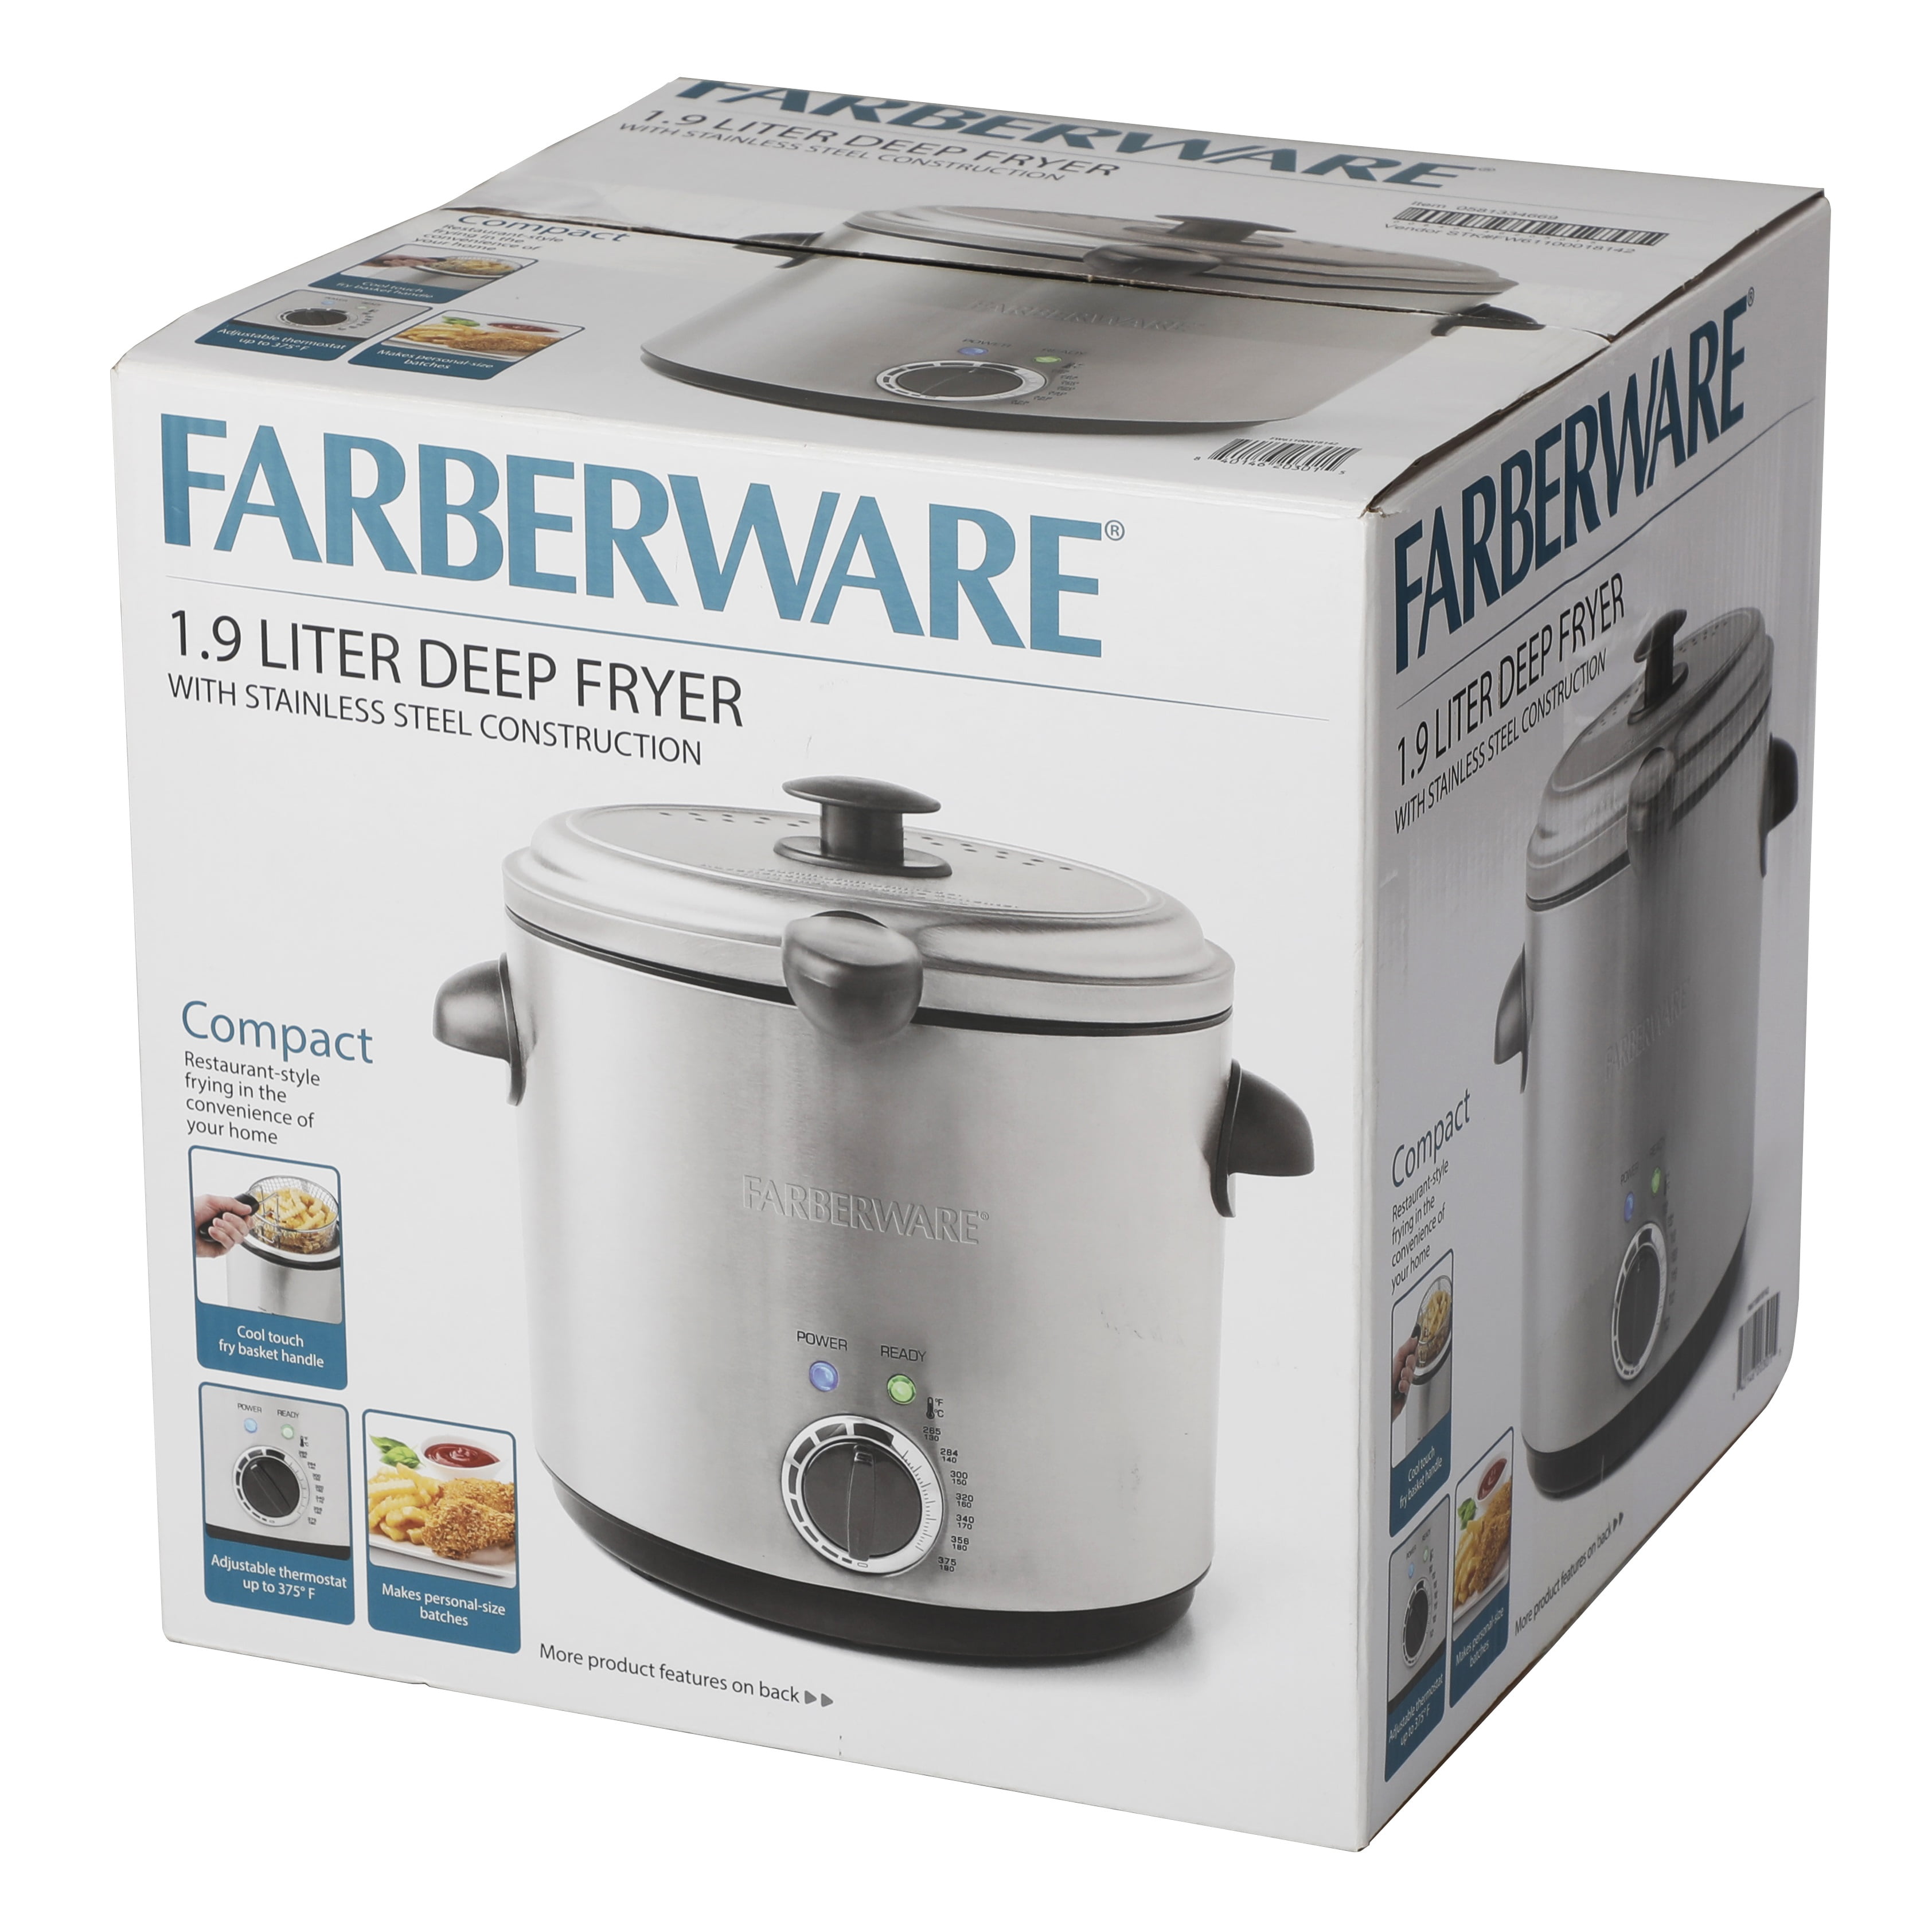 Farberware 14-lbs. extra large capacity deep fryer for $40 - Clark Deals